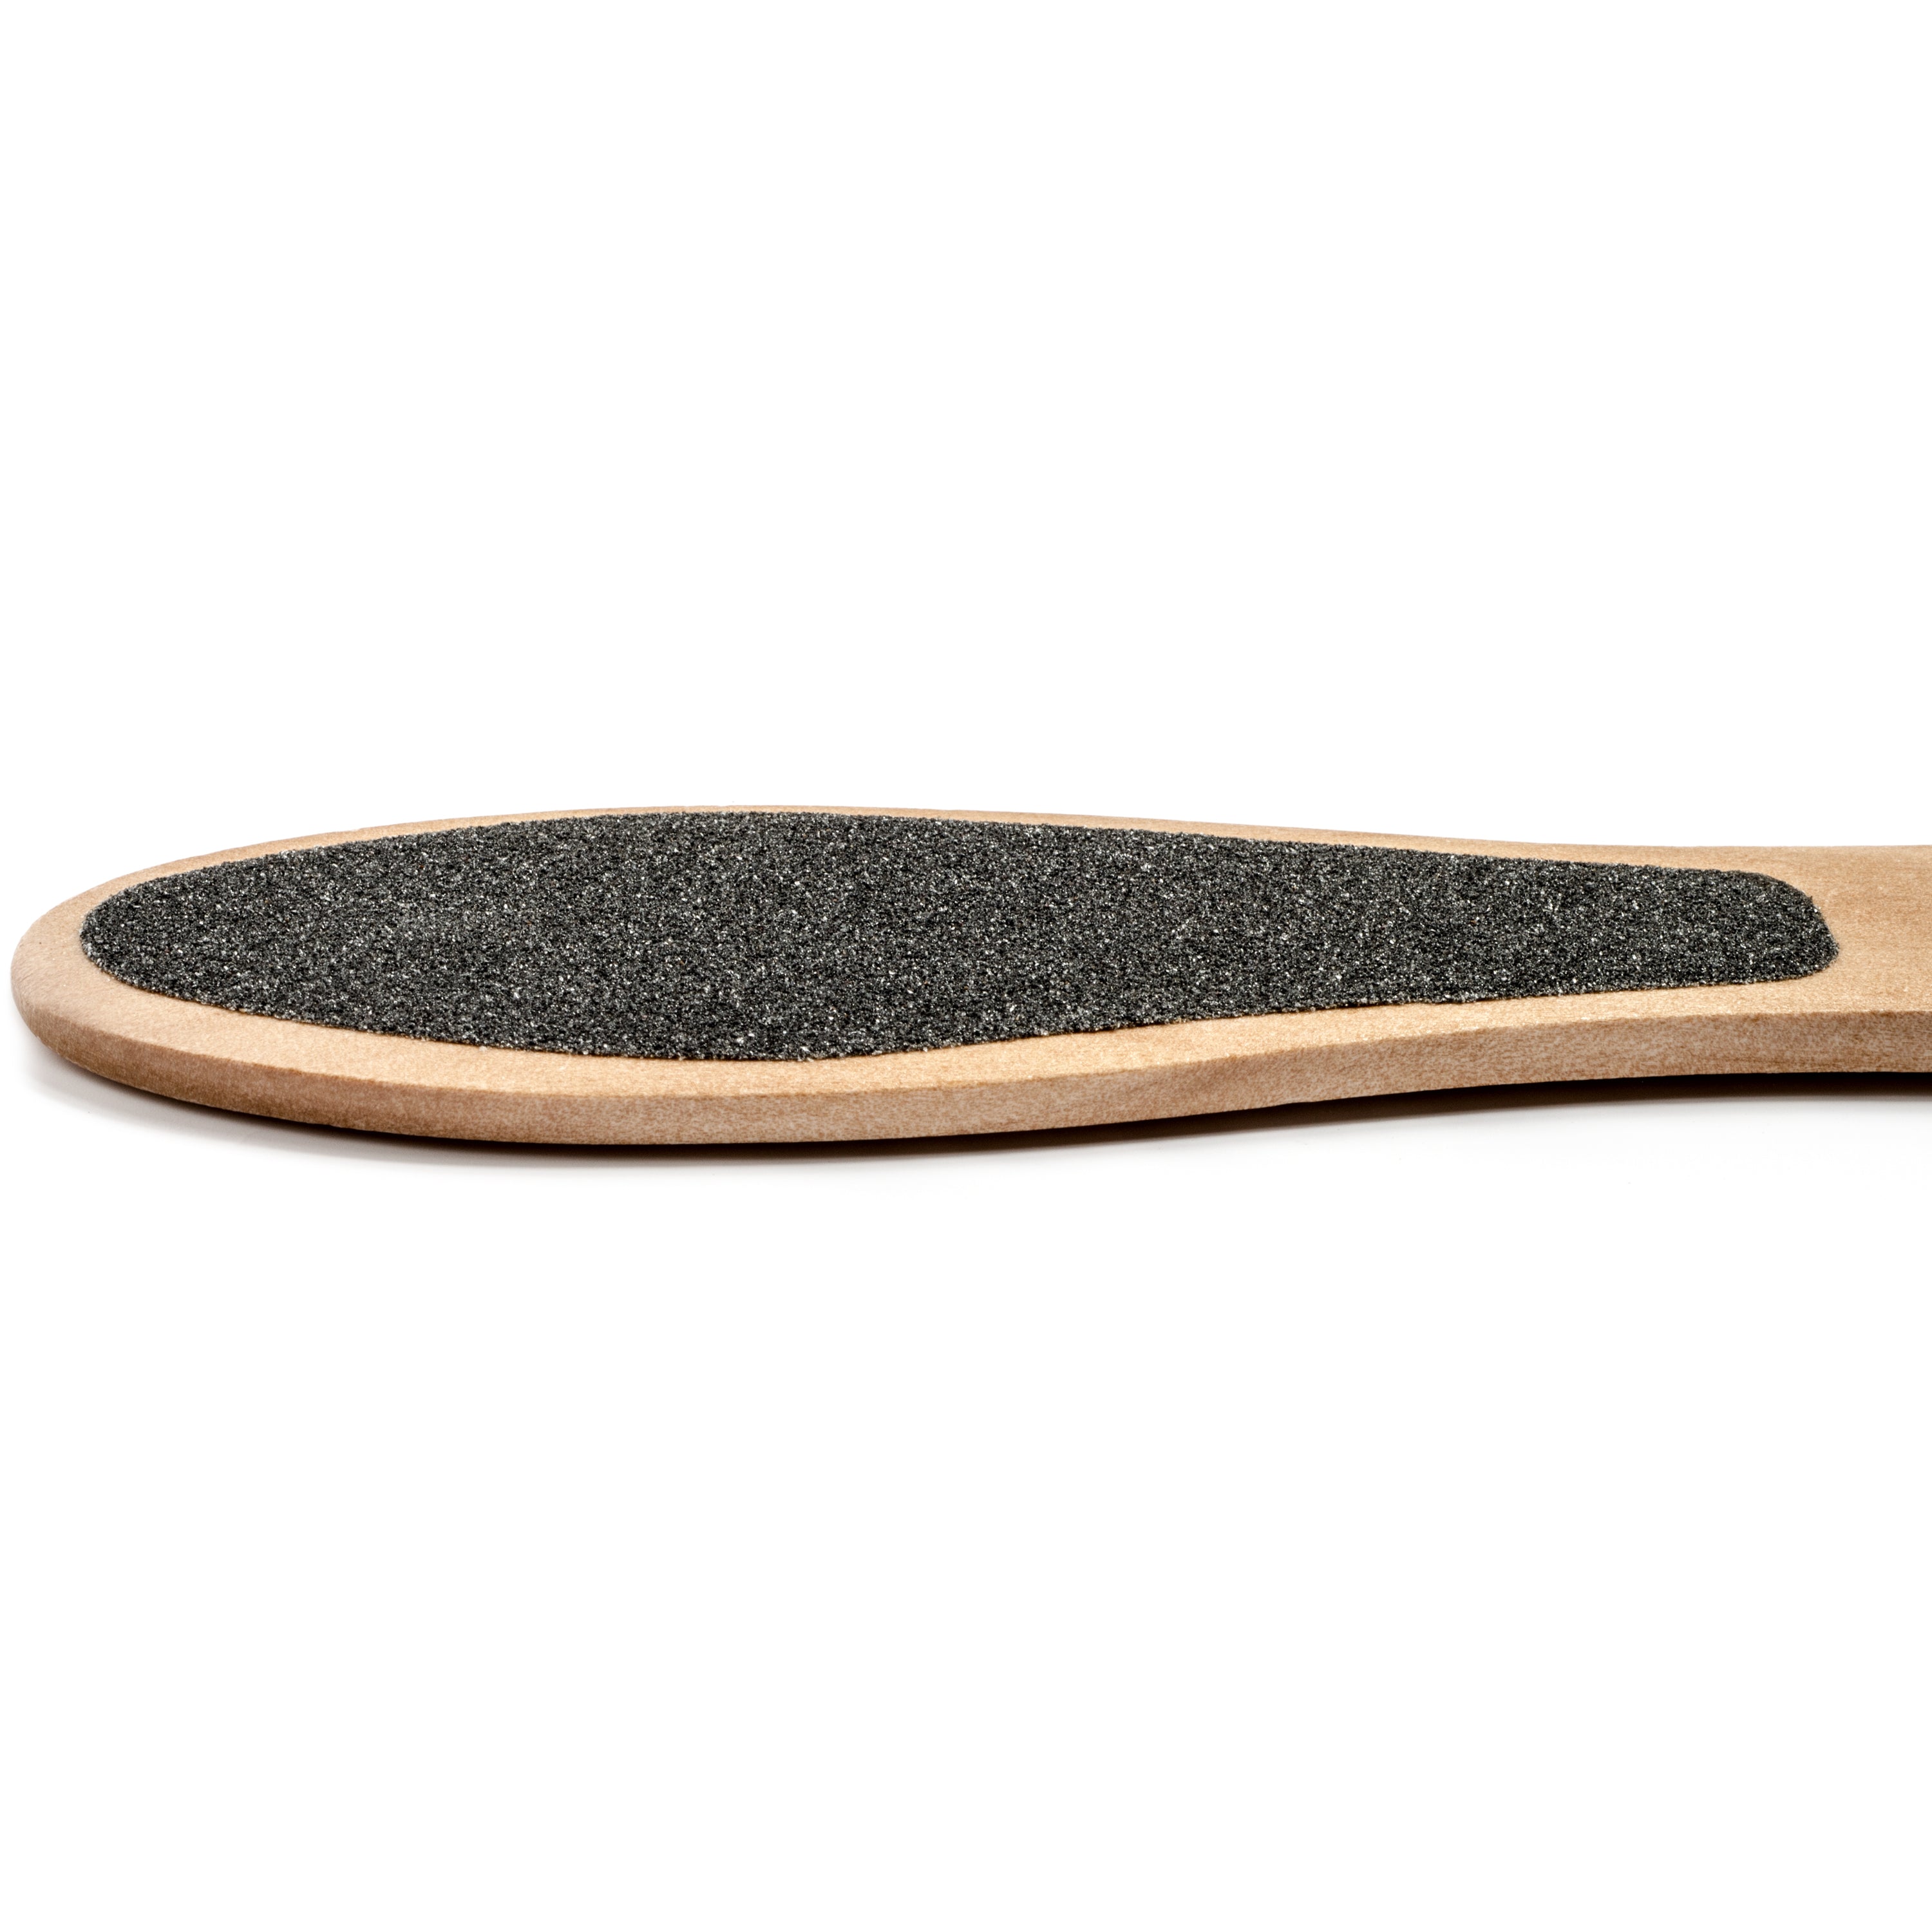 2 Sided Wooden Foot File - Dry, Dead Skin Exfoliator, Sander, & Scrubber Tool for Feet and Heel - Men & Women